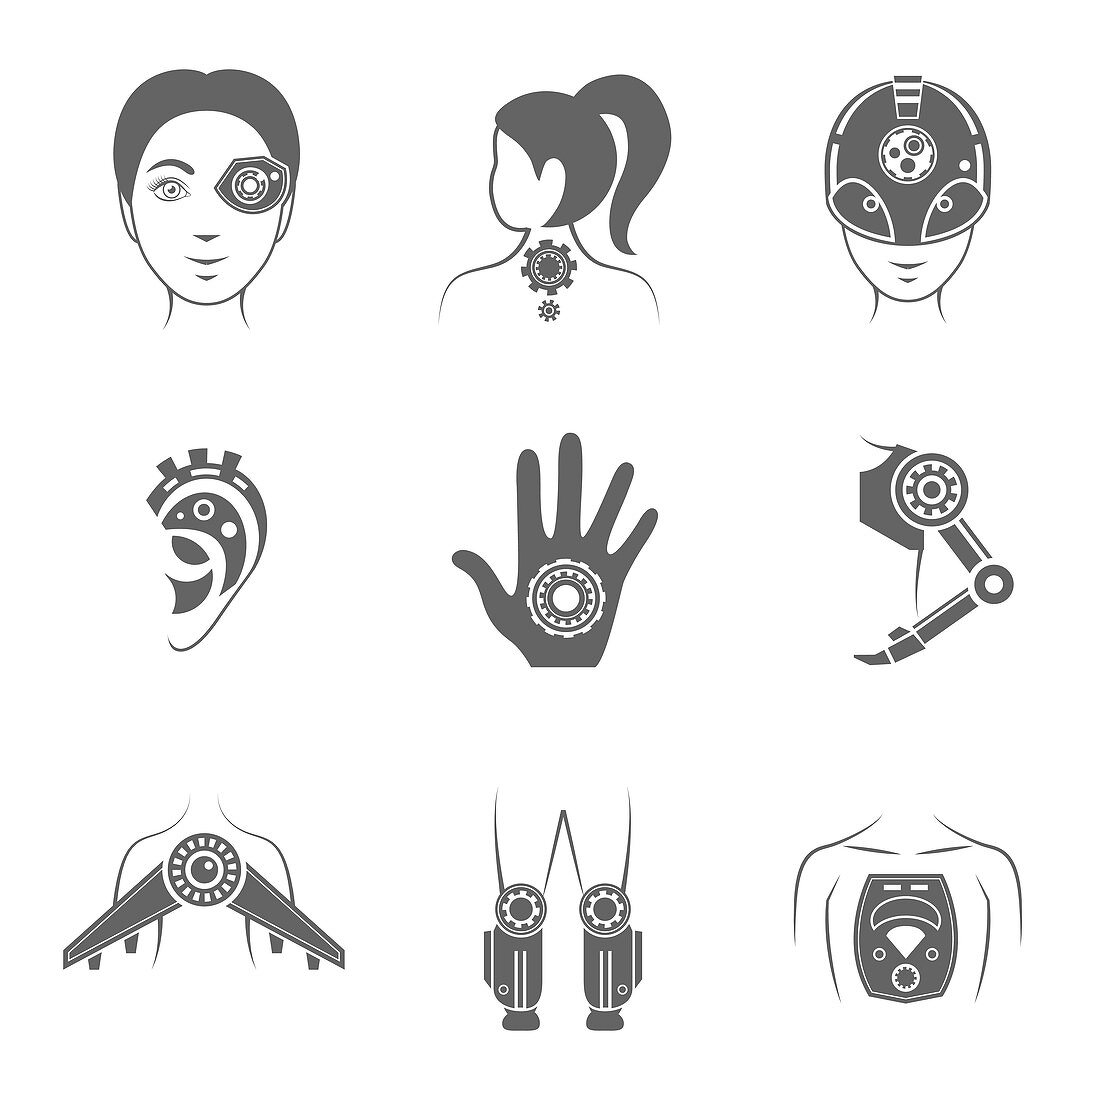 Cyborg icons, illustration